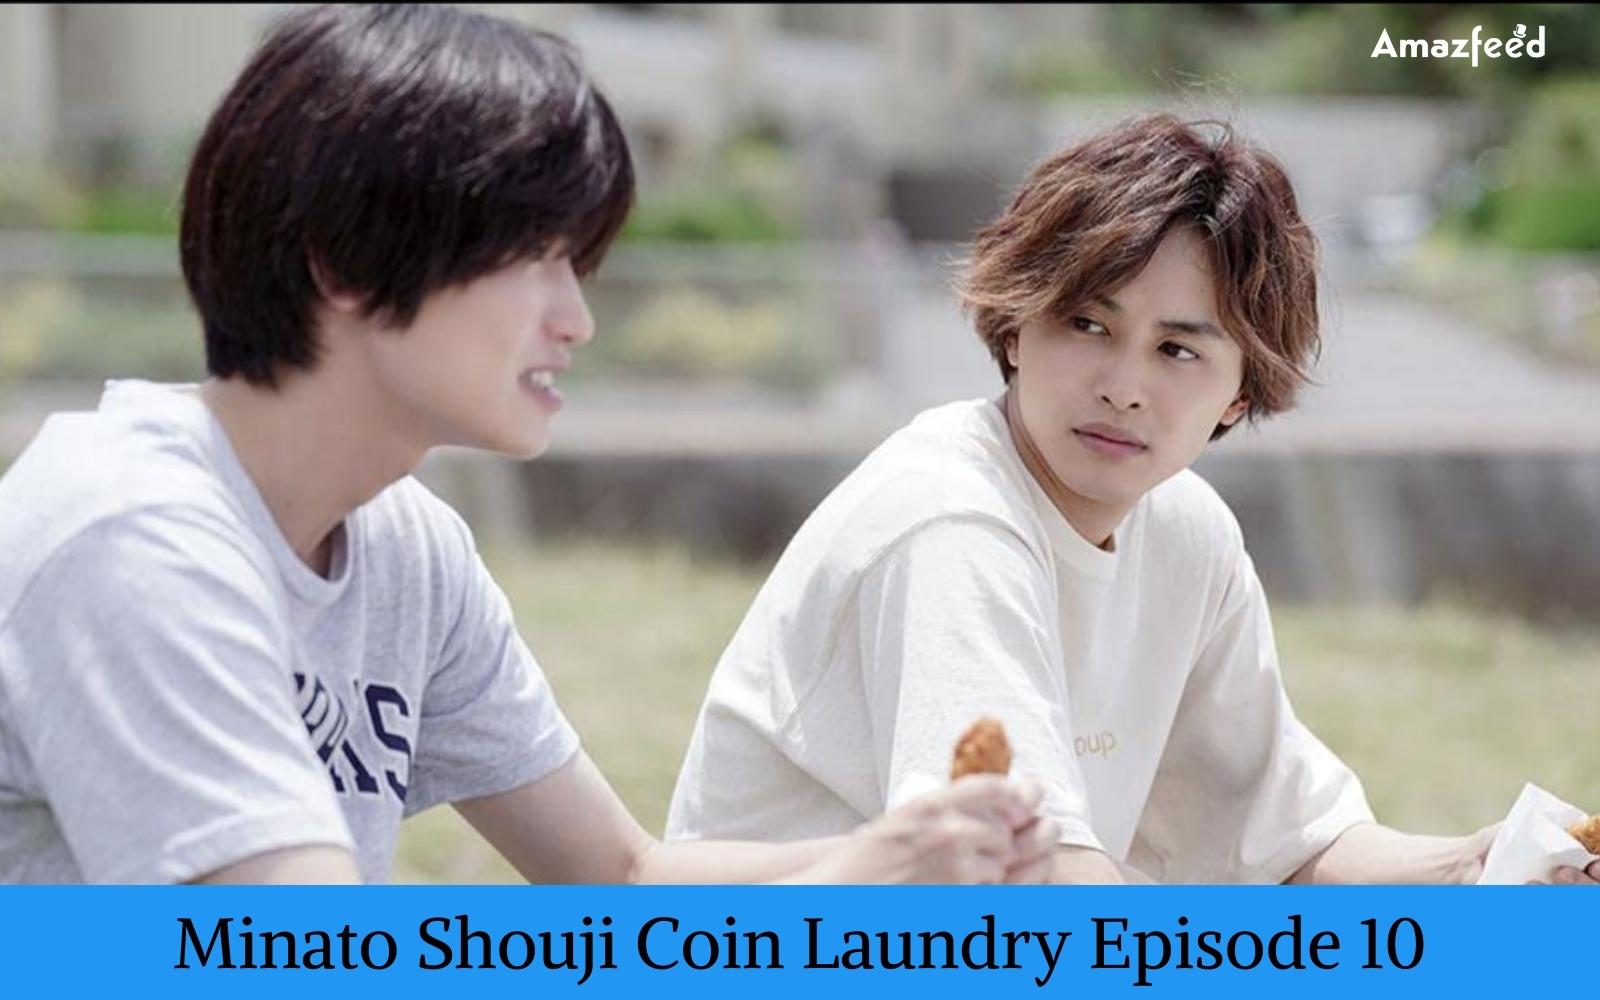 Minato Shouji Coin Laundry Episode 10 ⇒ Countdown, Release Date, Spoilers, Recap, Cast & News Updates